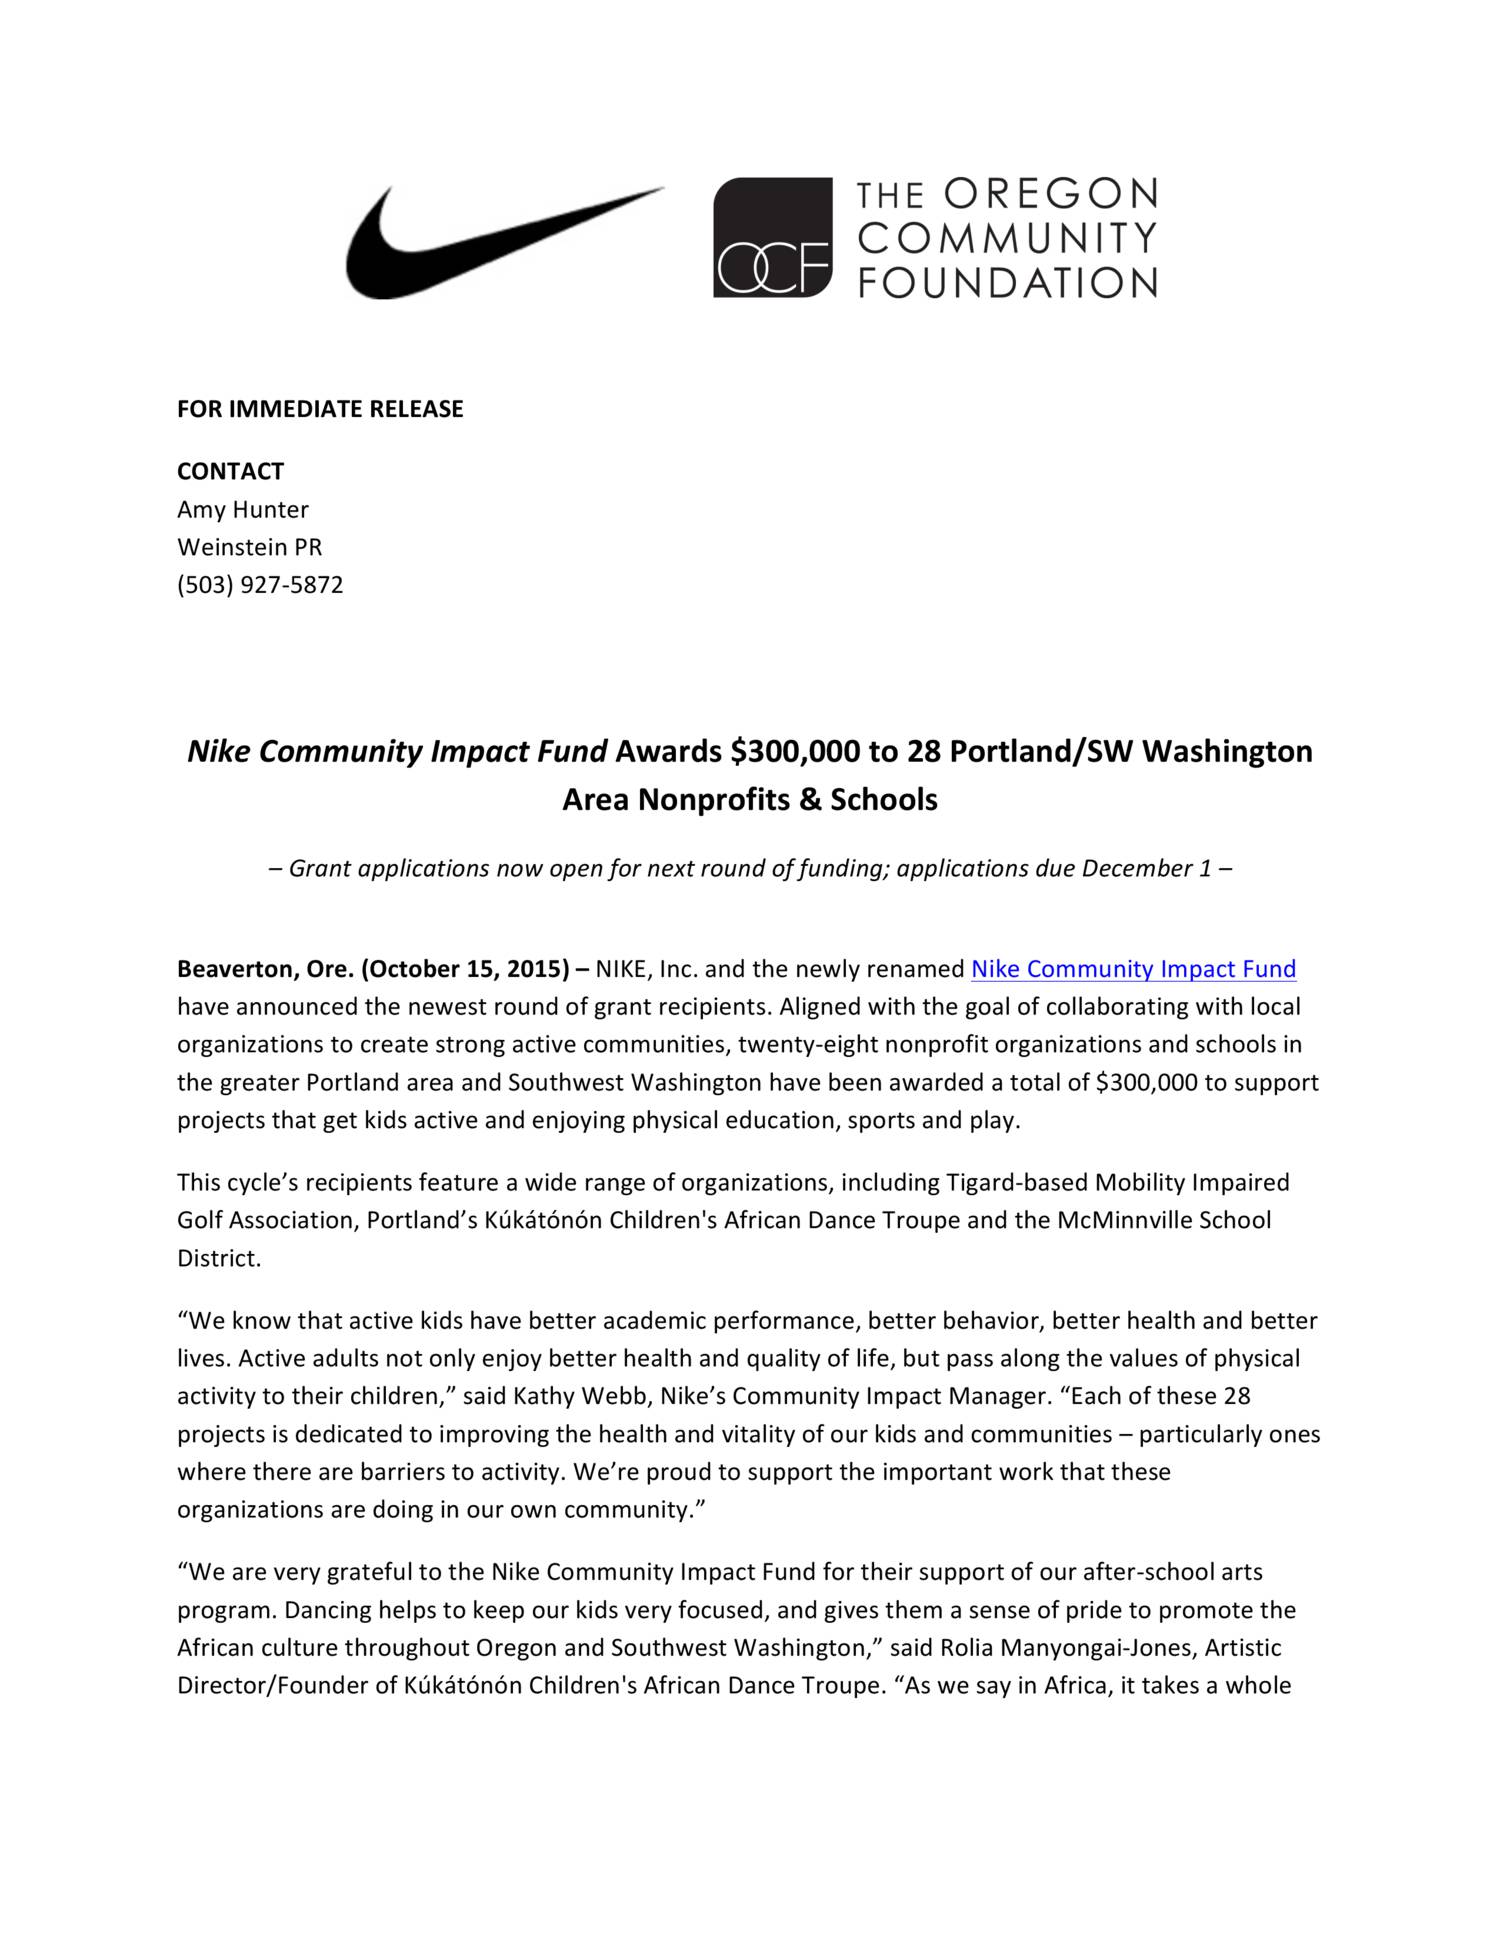 Hoes verband In de omgeving van Nike Community Impact Fund press release_ Fall15Funding_10-15-15.pdf |  DocDroid